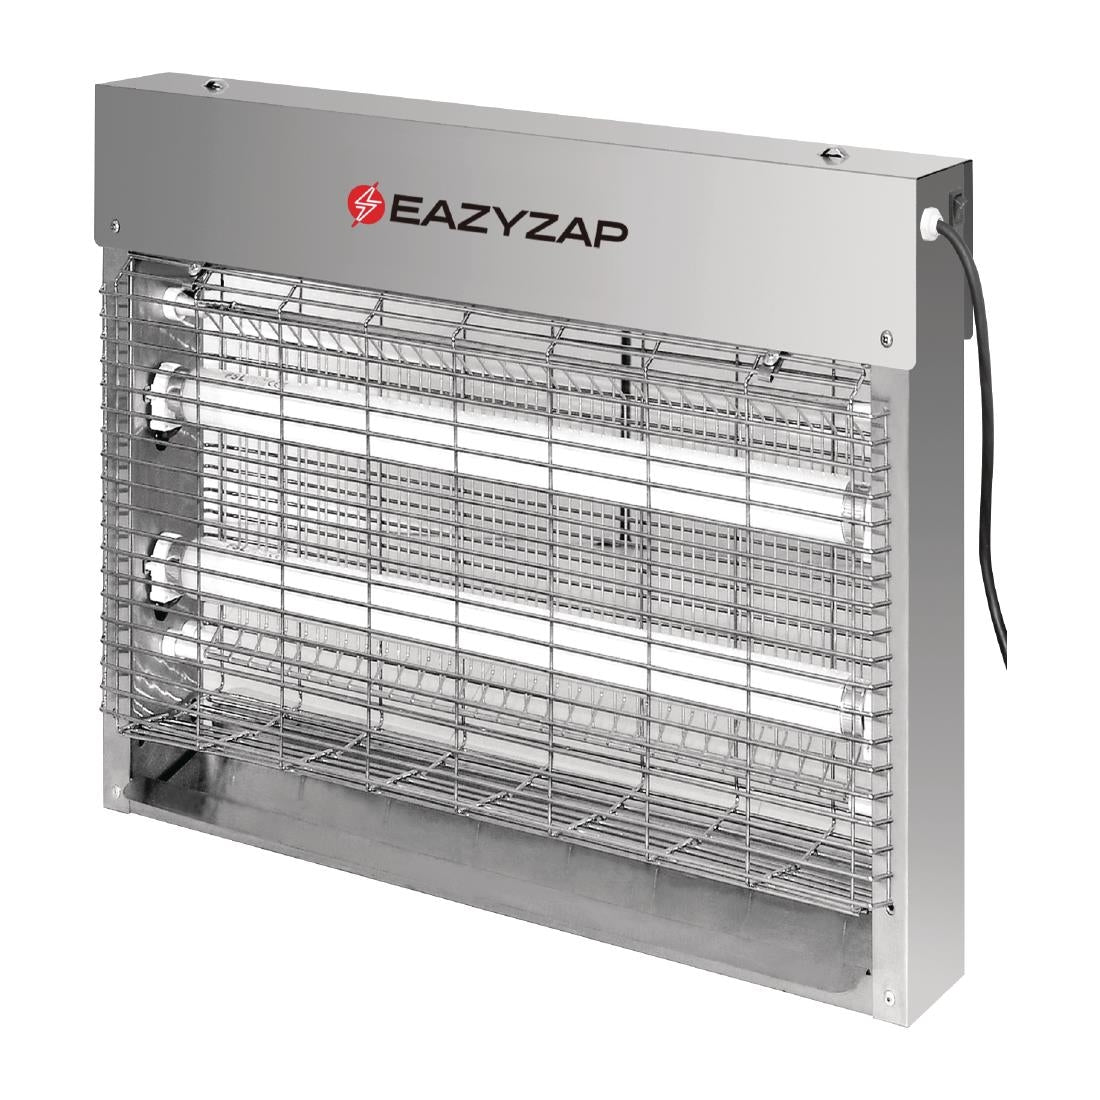 FP983 Eazyzap Energy Efficient Stainless Steel LED Fly Killer 30mÃ‚Â²